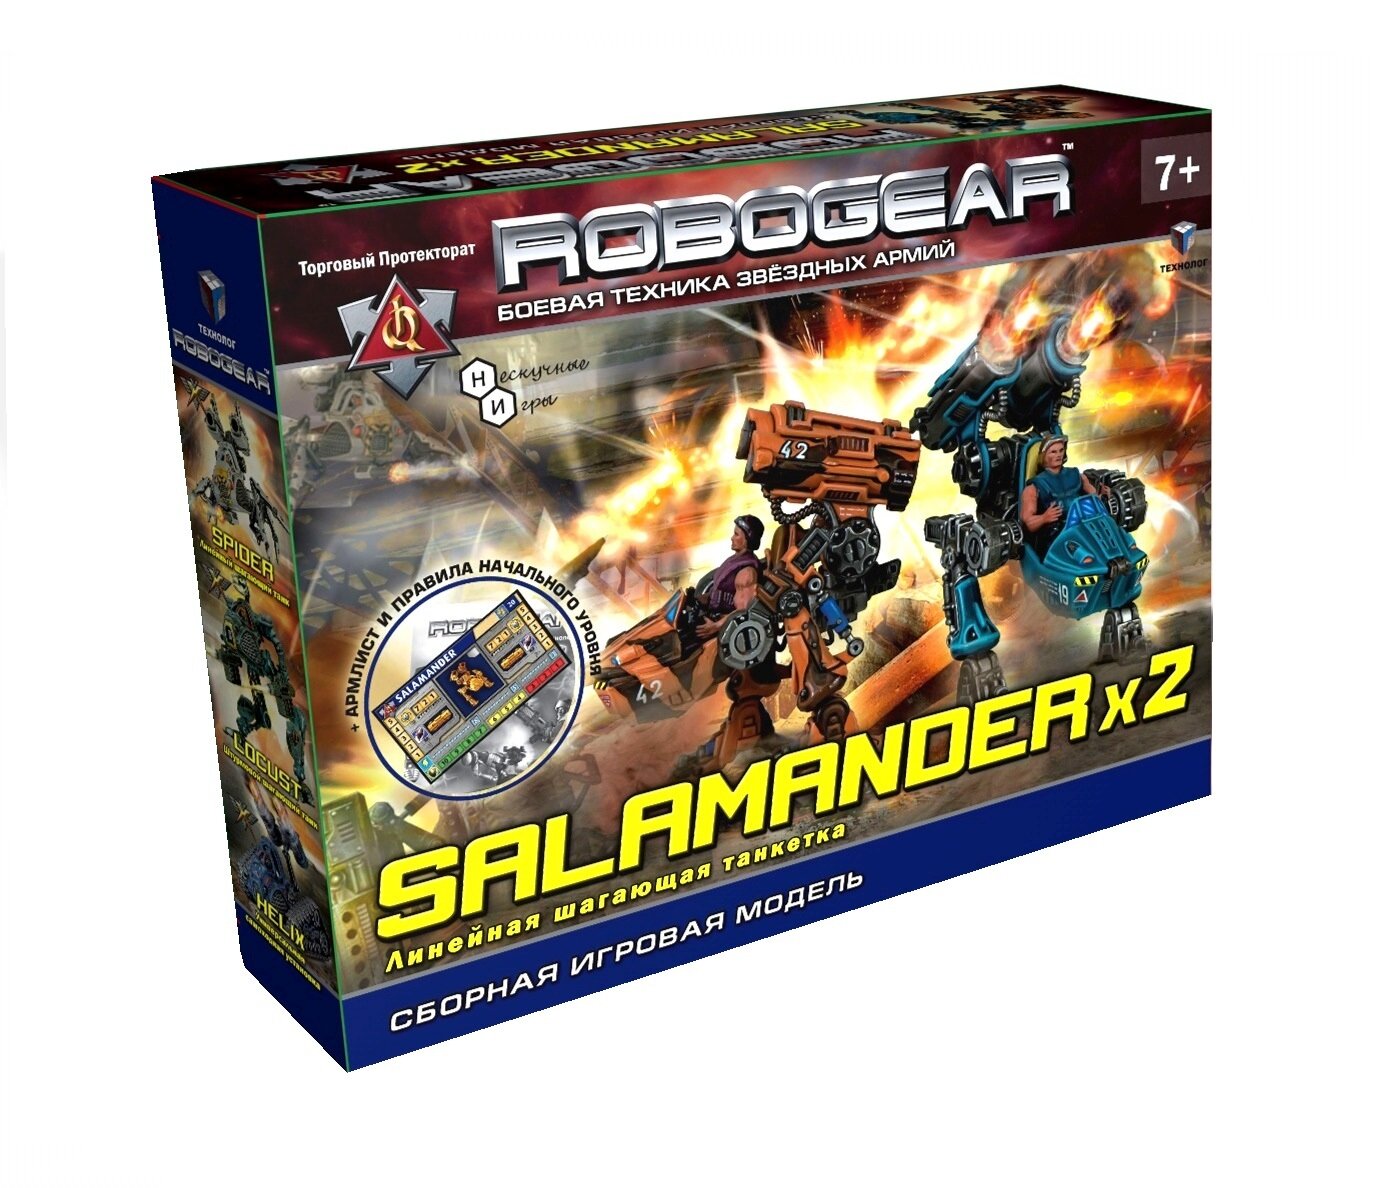 ТХ. Robogear "SALAMANDER X 2" (Саламандер) арт.00568 (две модели) /20